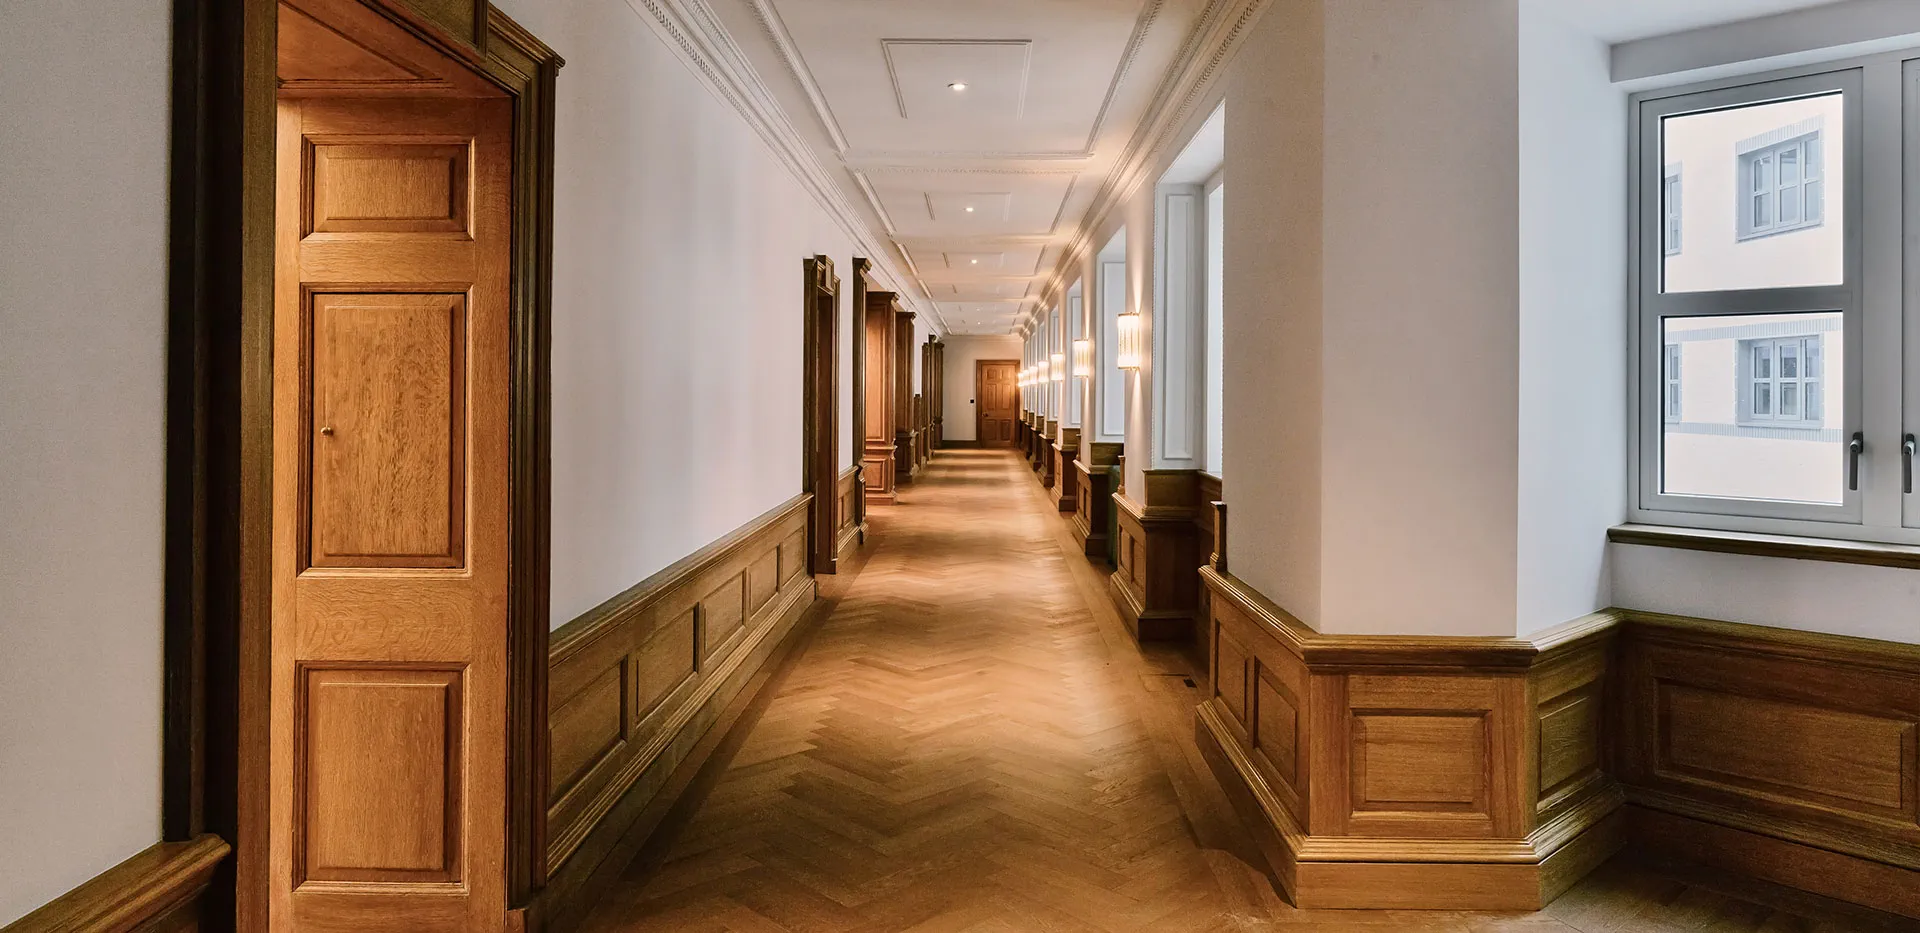 9-millbank_the-conrad_interior_hallway2